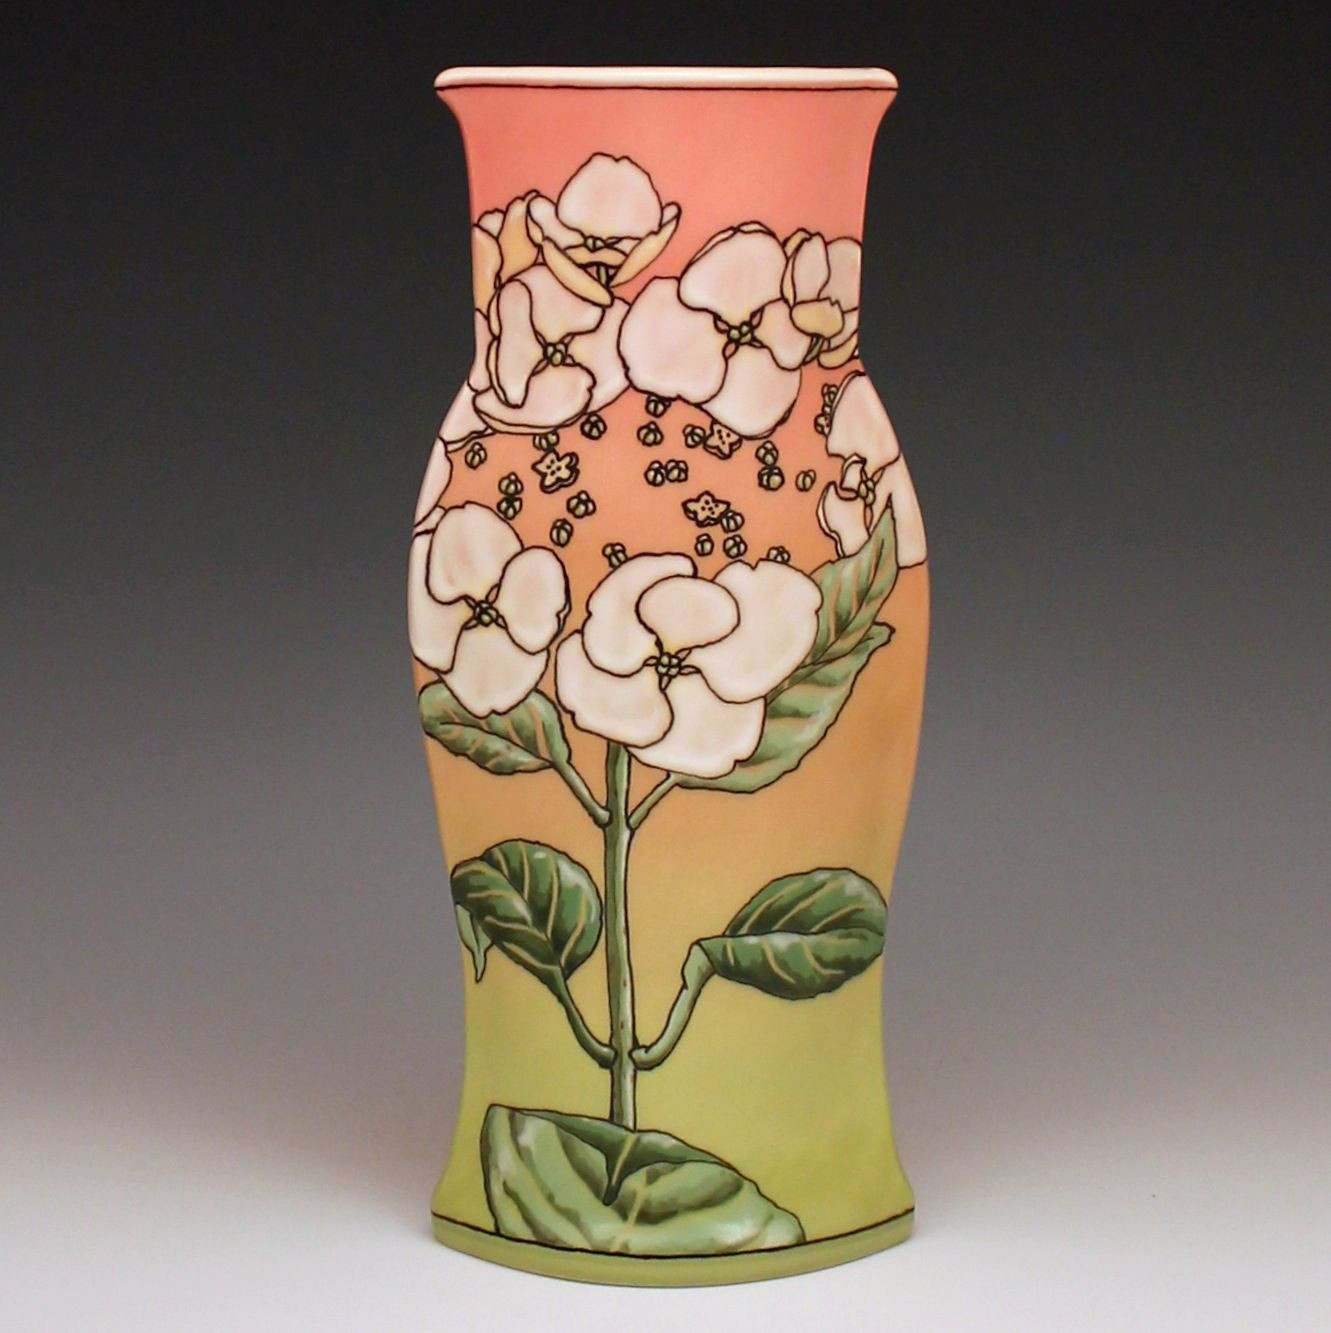 polka dot vase of hydrangea vase by sarah gregory work pinterest hydrangea regarding hydrangea vase by sarah gregory